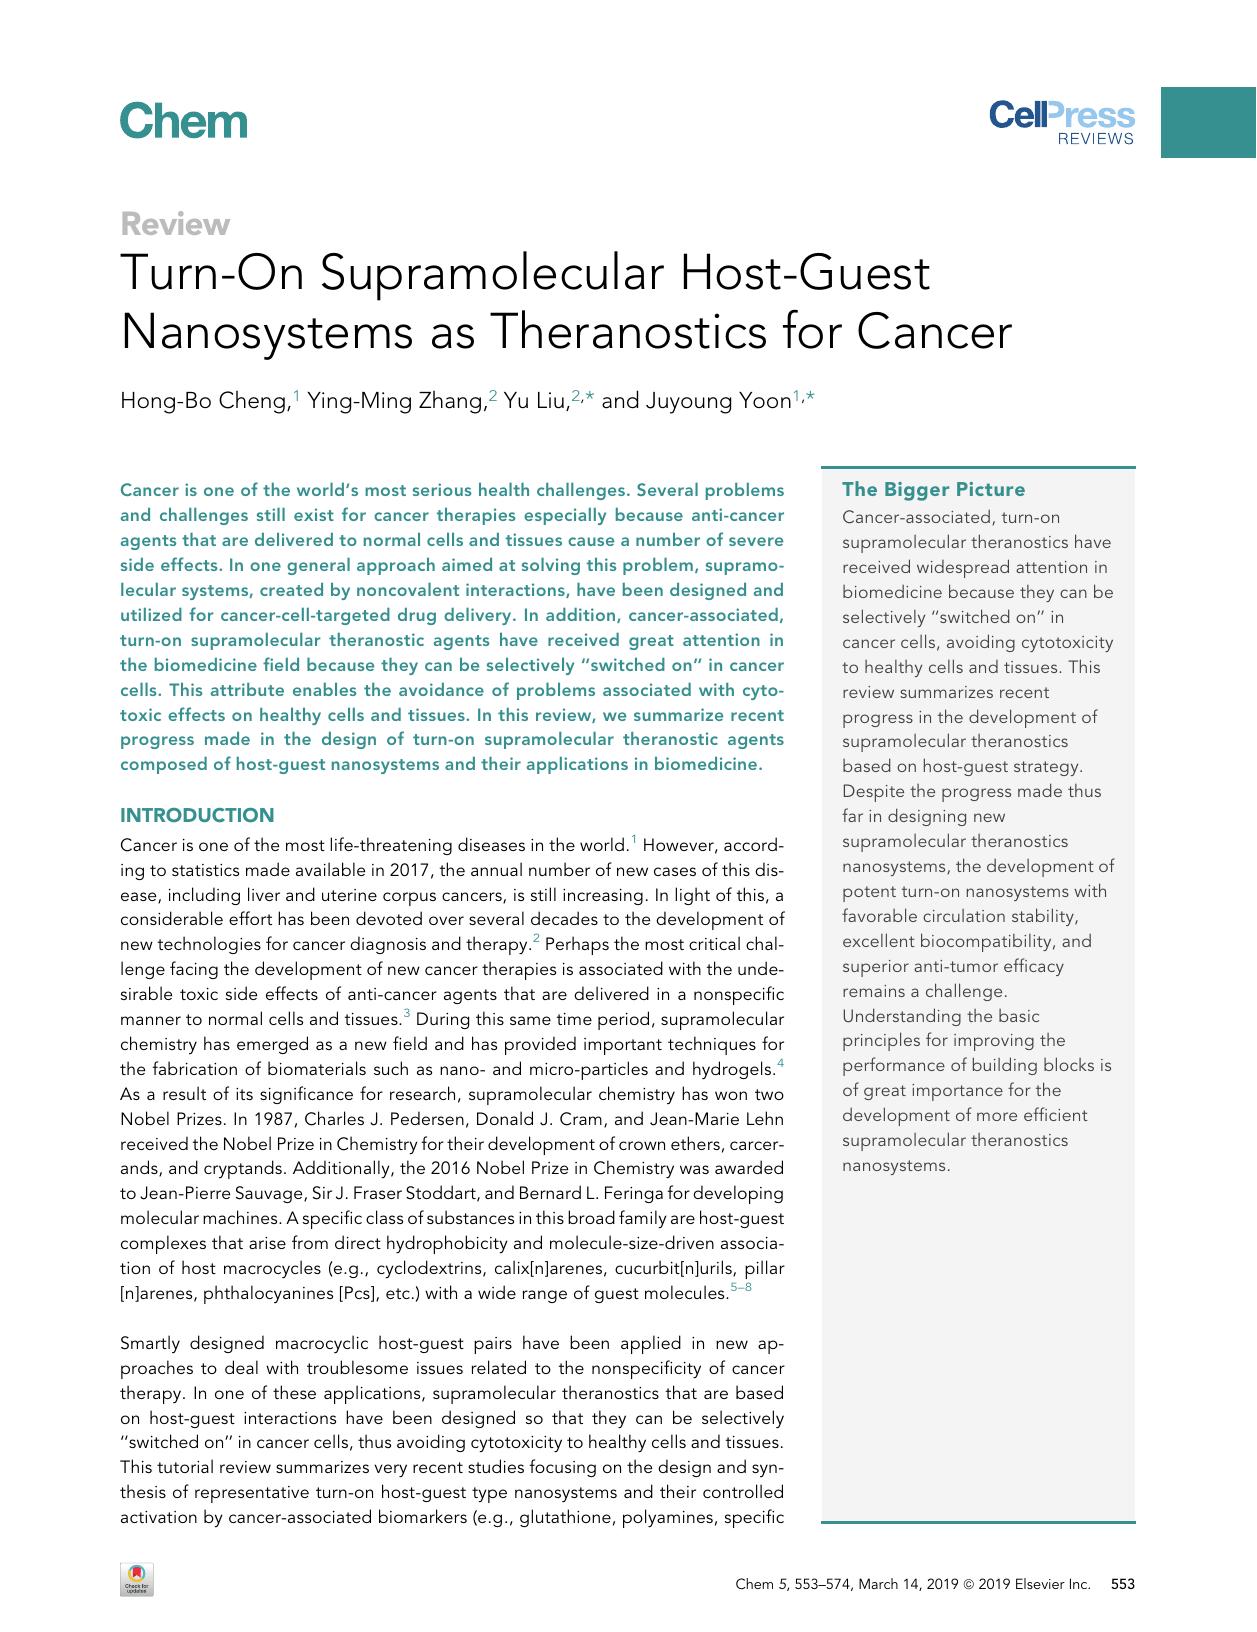 Turn-On Supramolecular Host-Guest Nanosystems as Theranostics for Cancer by Hong-Bo Cheng & Ying-Ming Zhang & Yu Liu & Juyoung Yoon